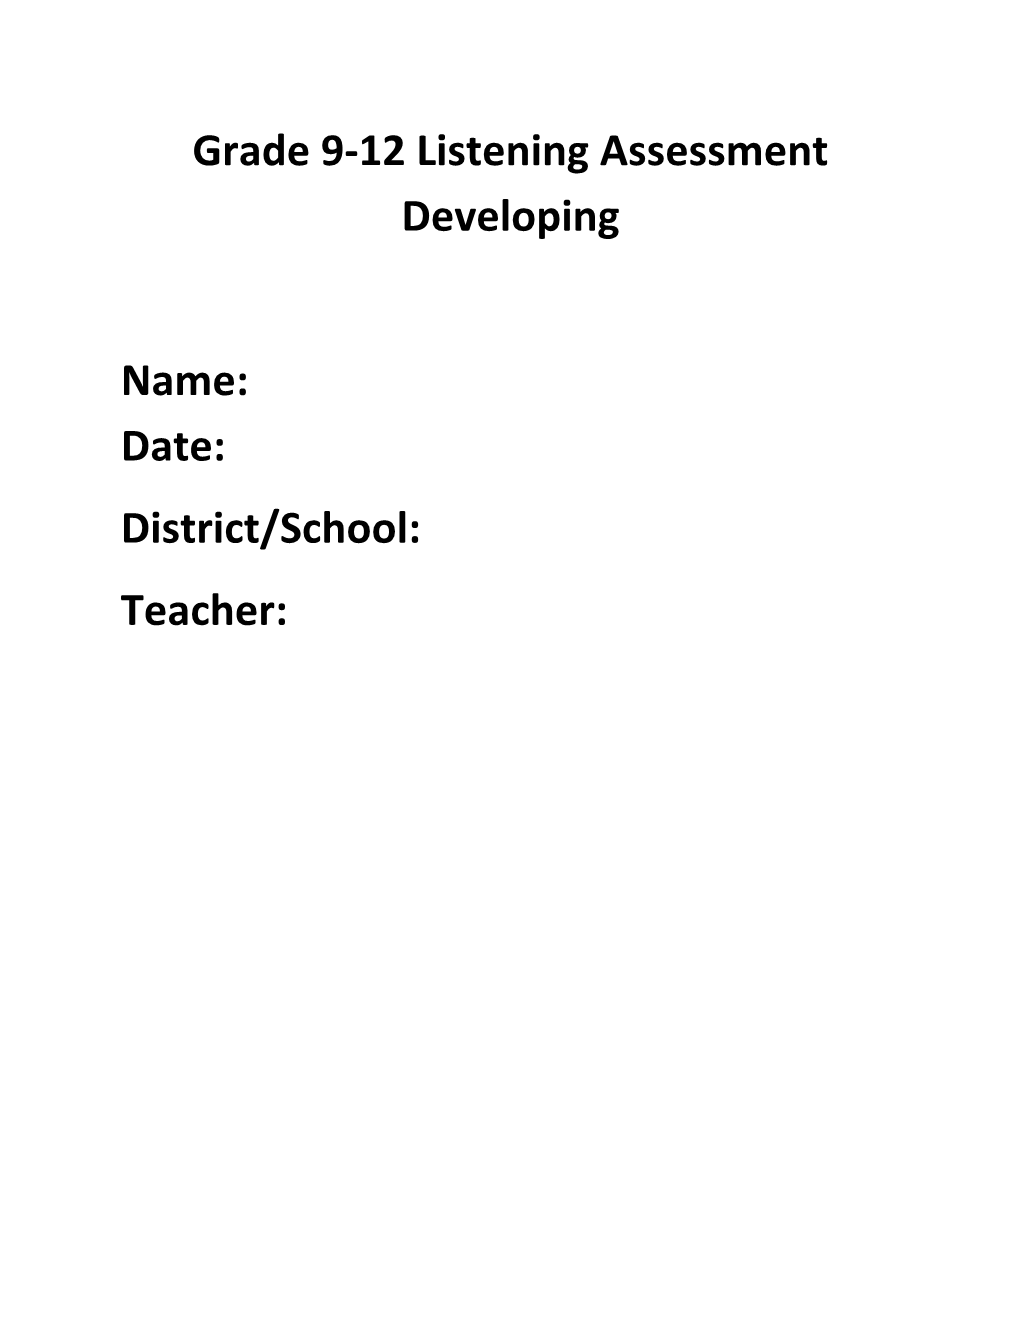 Grade 9-12 Listening Assessment Developing